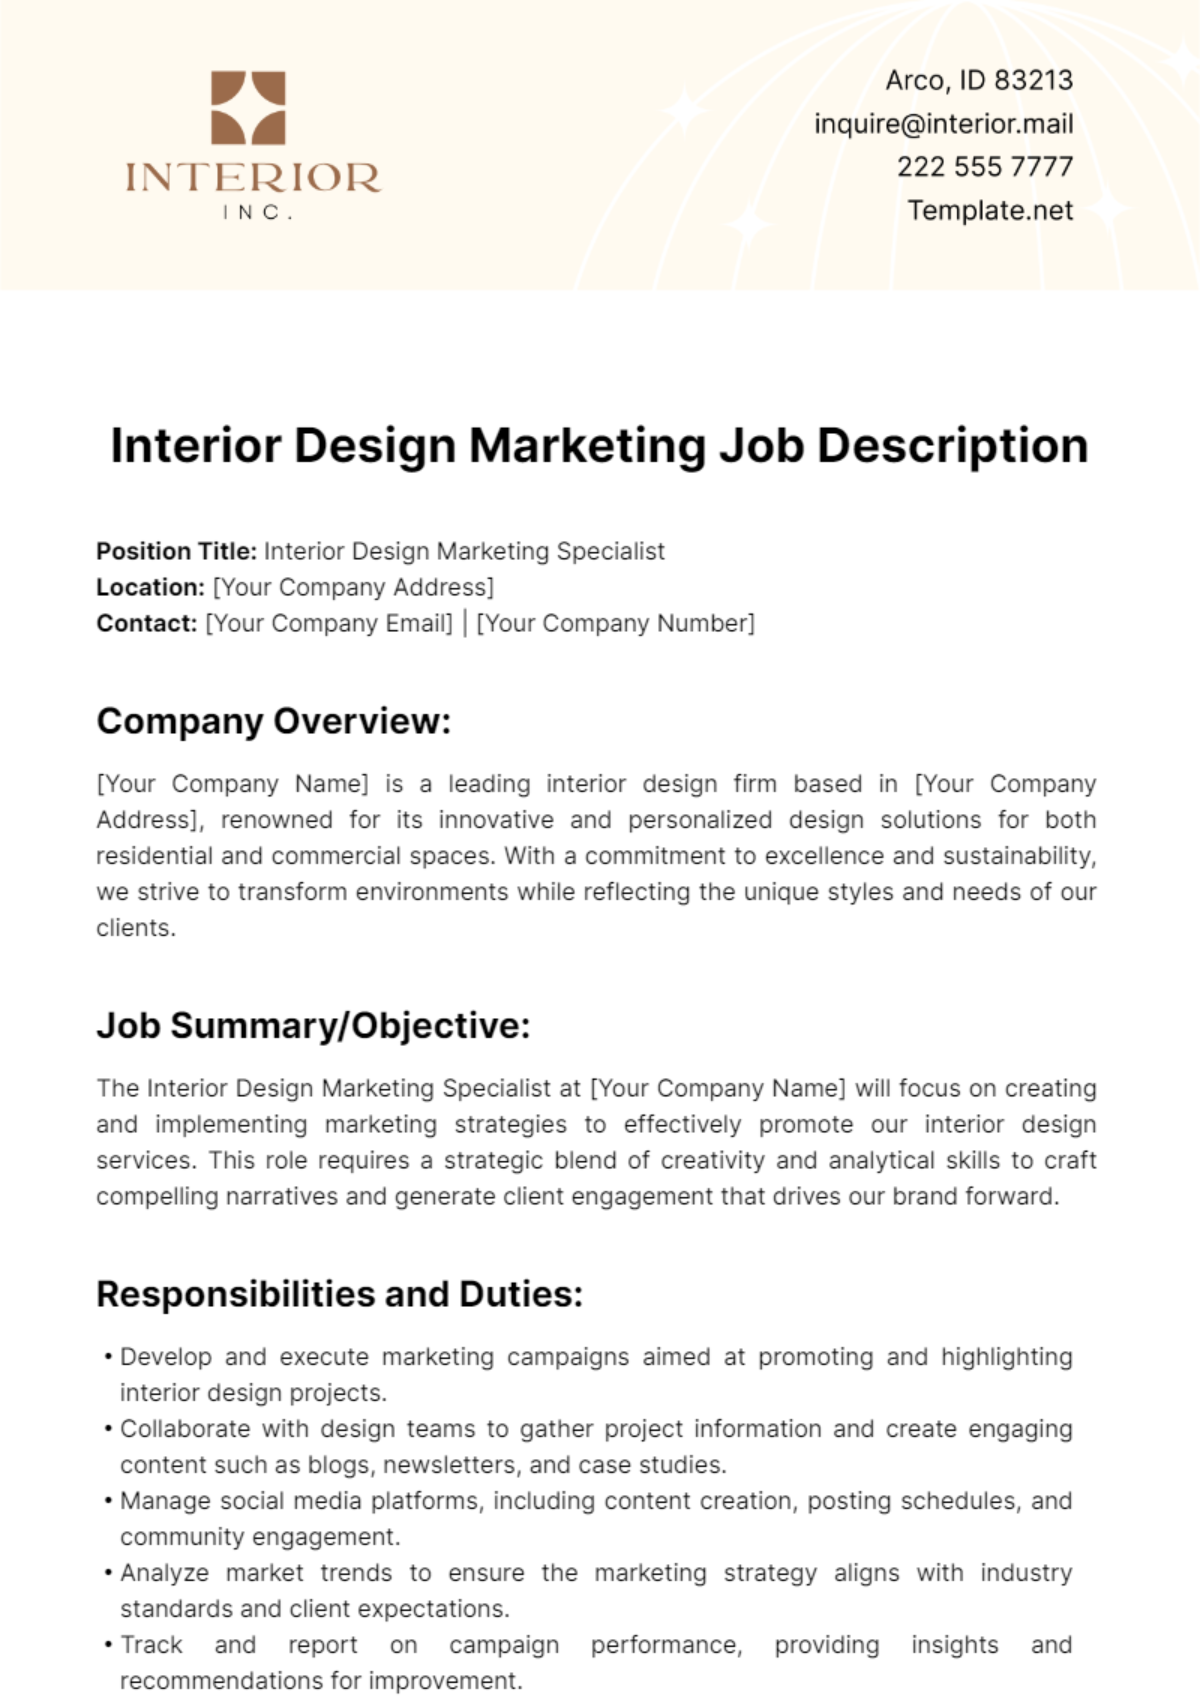 Free Interior Design Marketing Job Description Template